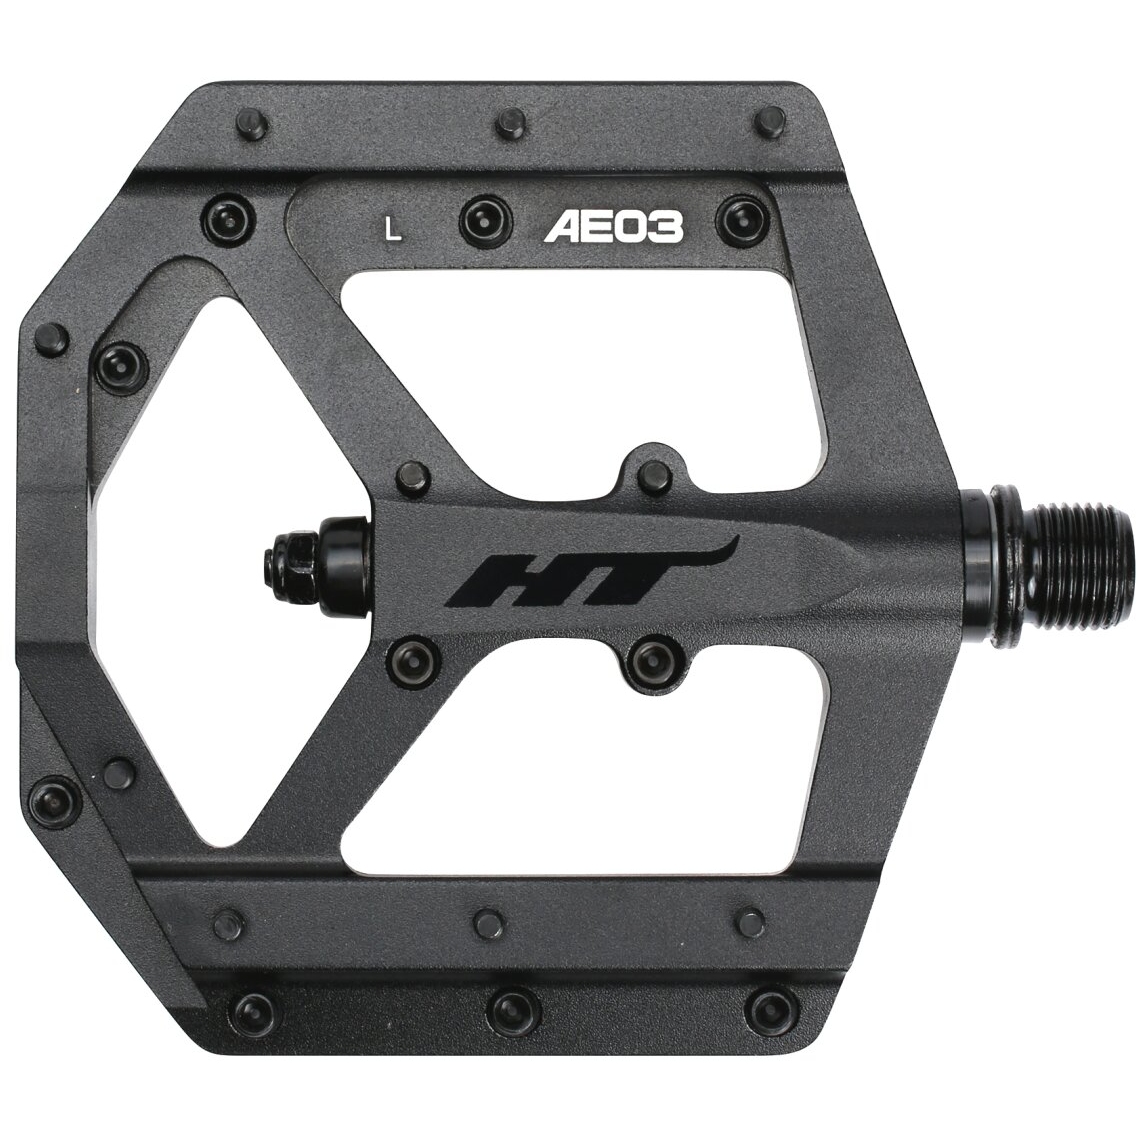 Productfoto van HT AE03 EVO+ Platformpedalen Aluminium - stealth black